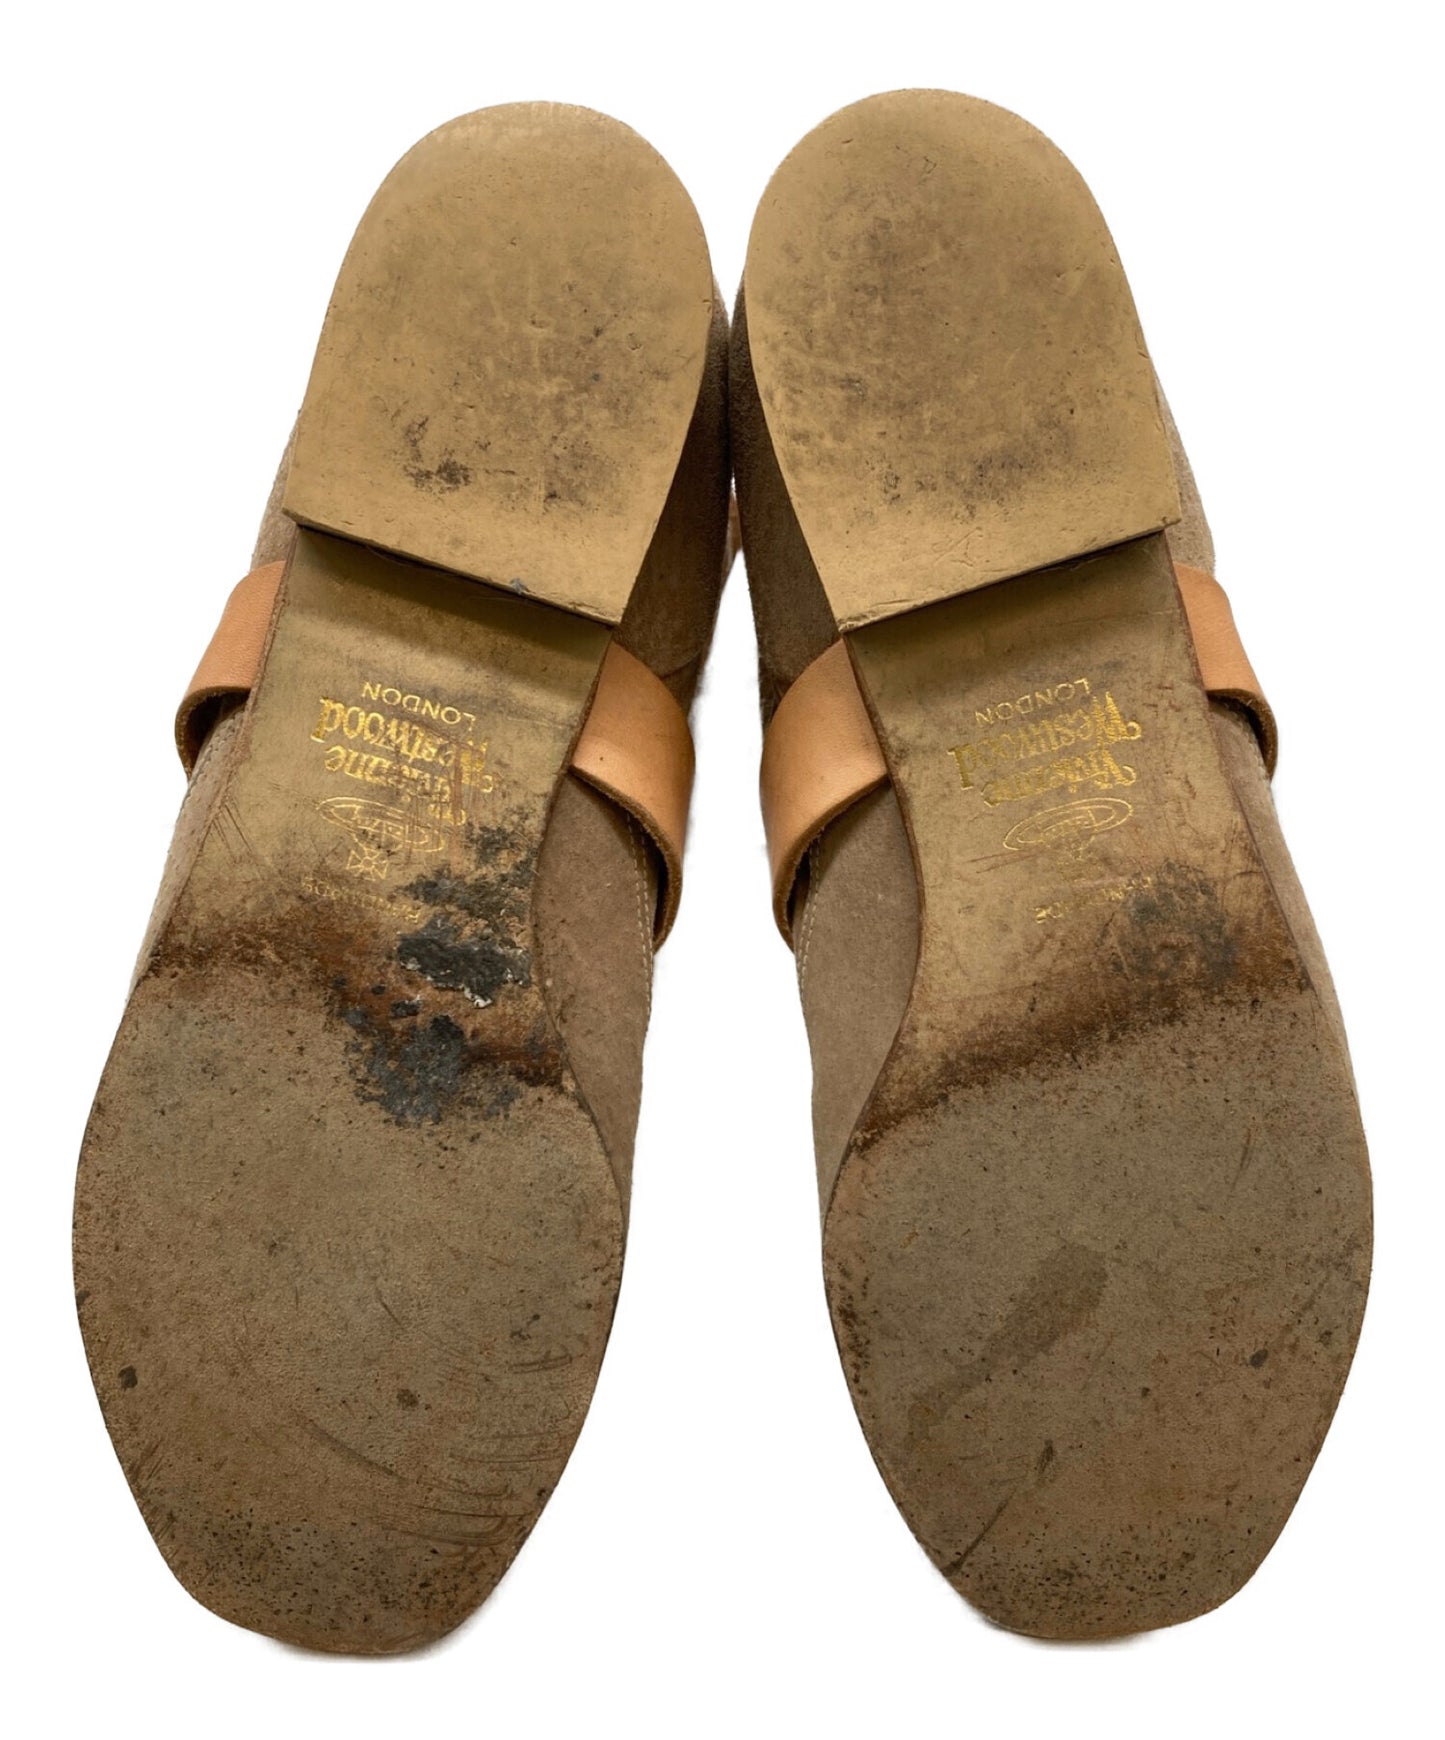 Vivienne Westwood海盜靴子 /長靴 /靴子